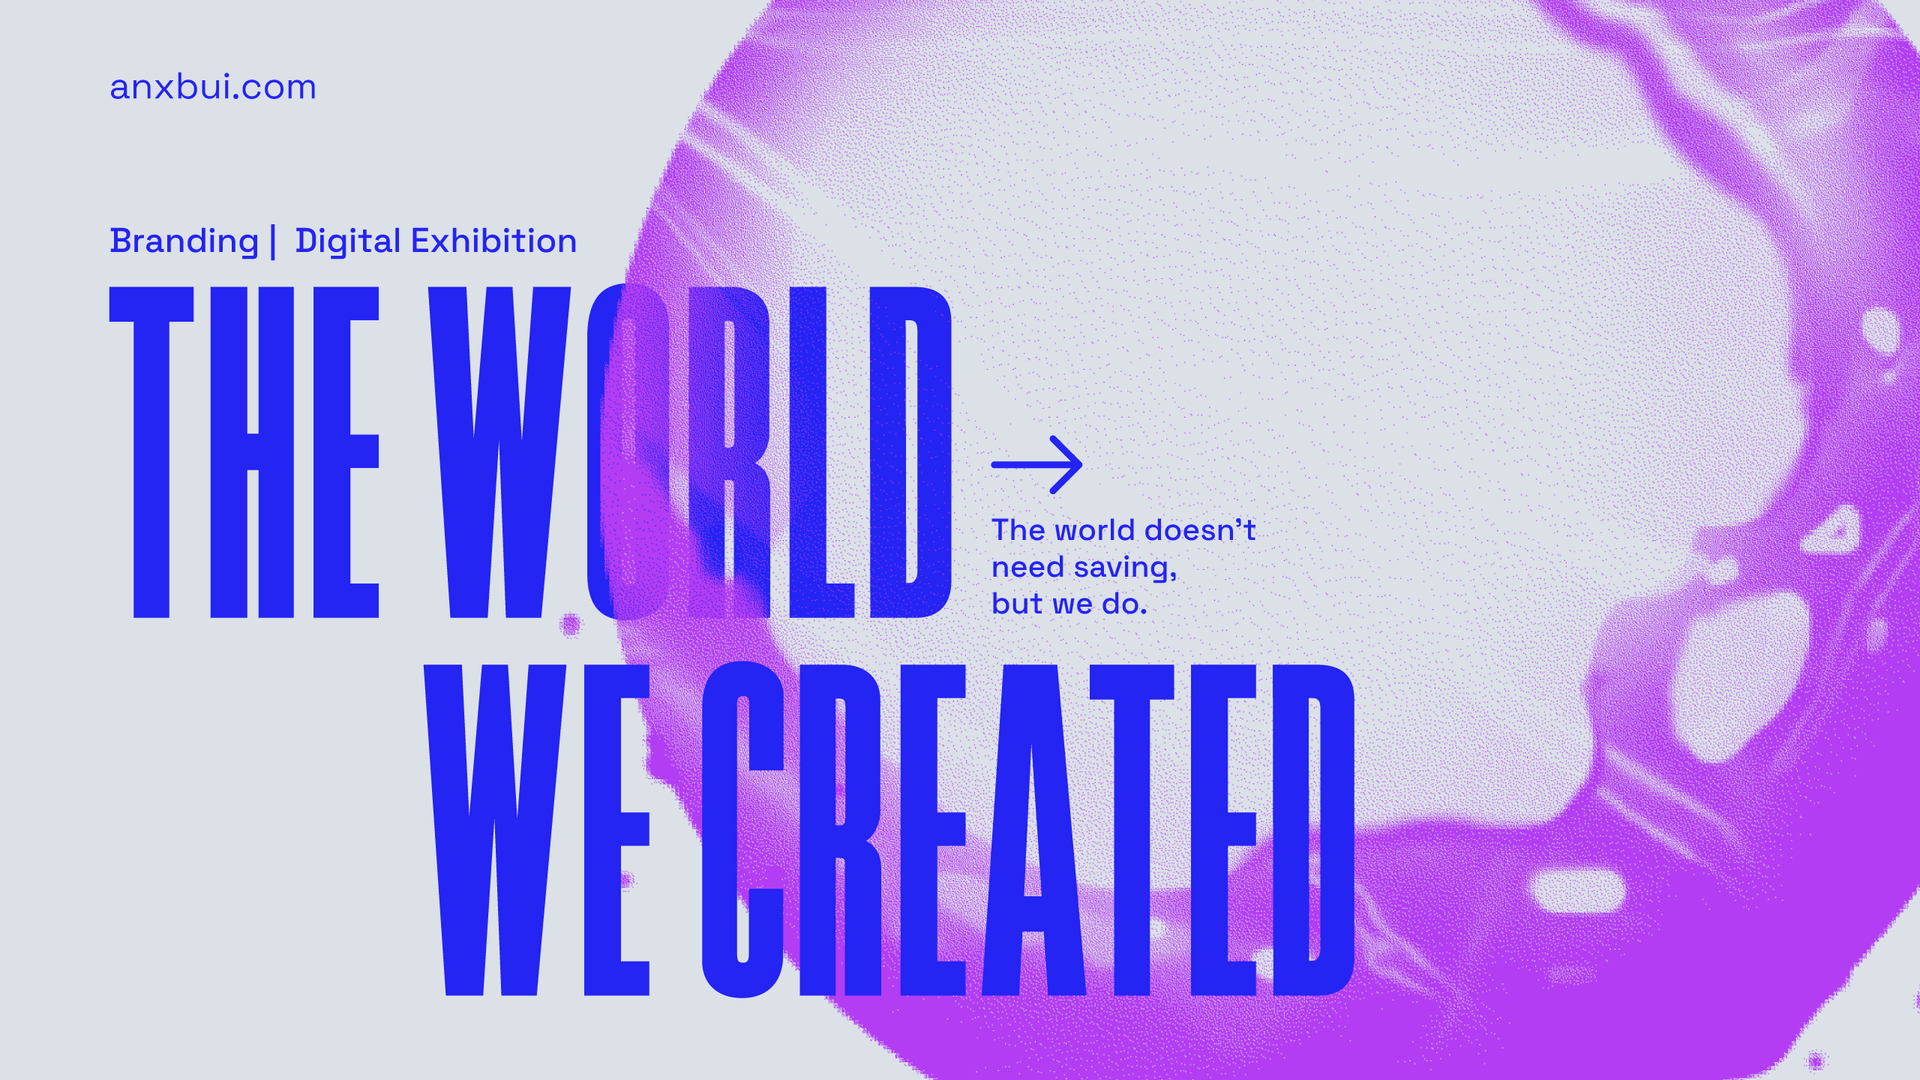 The World We Created